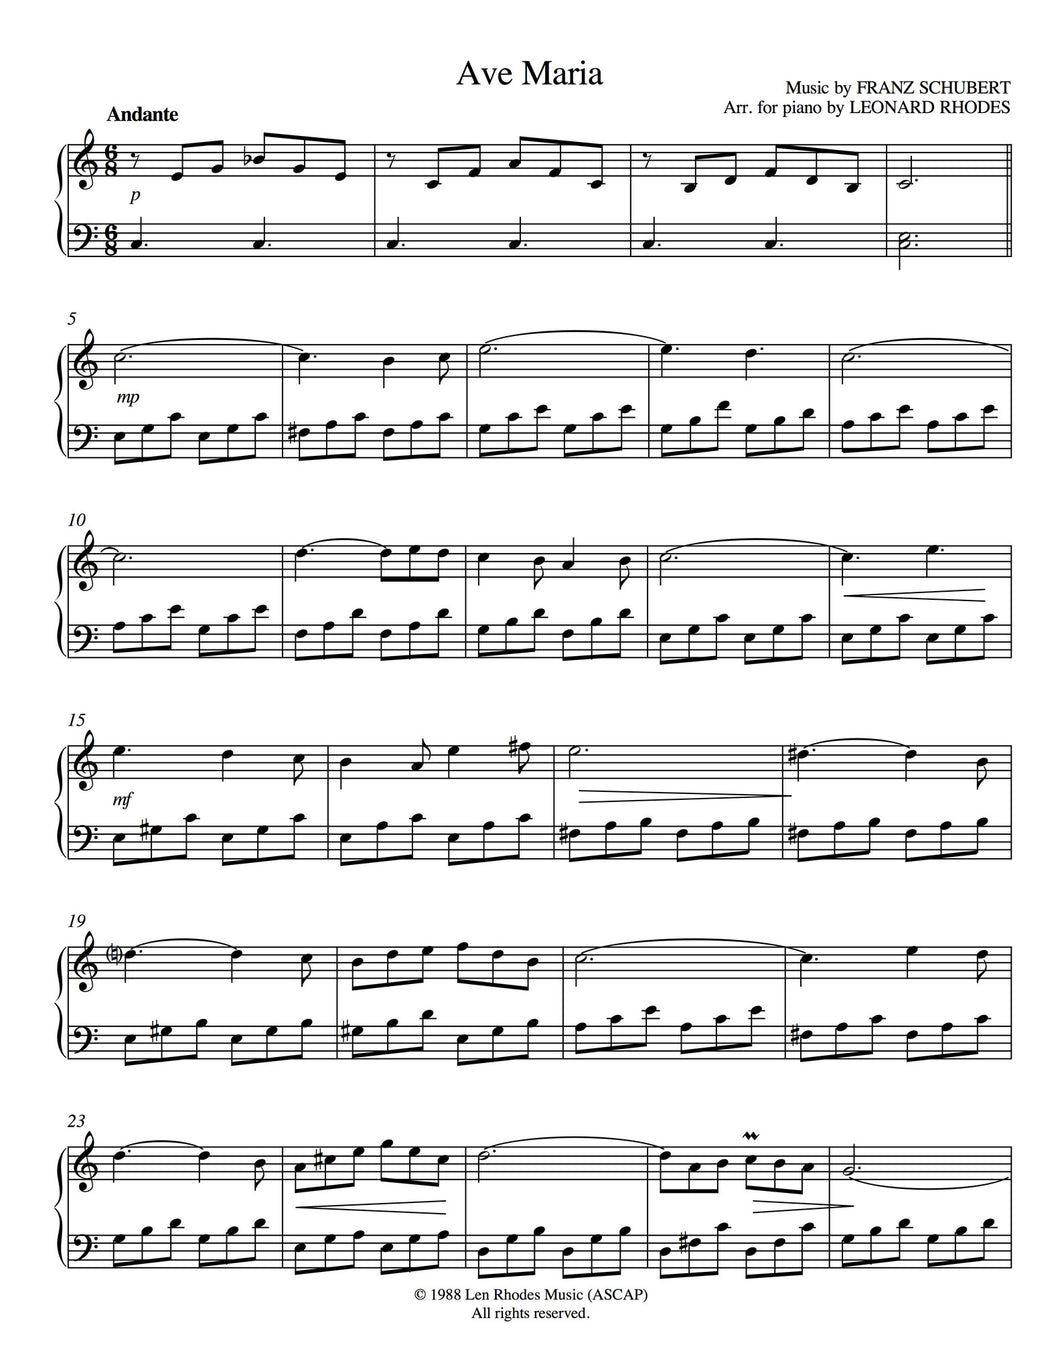 Ave Maria, Schubert - easy Piano